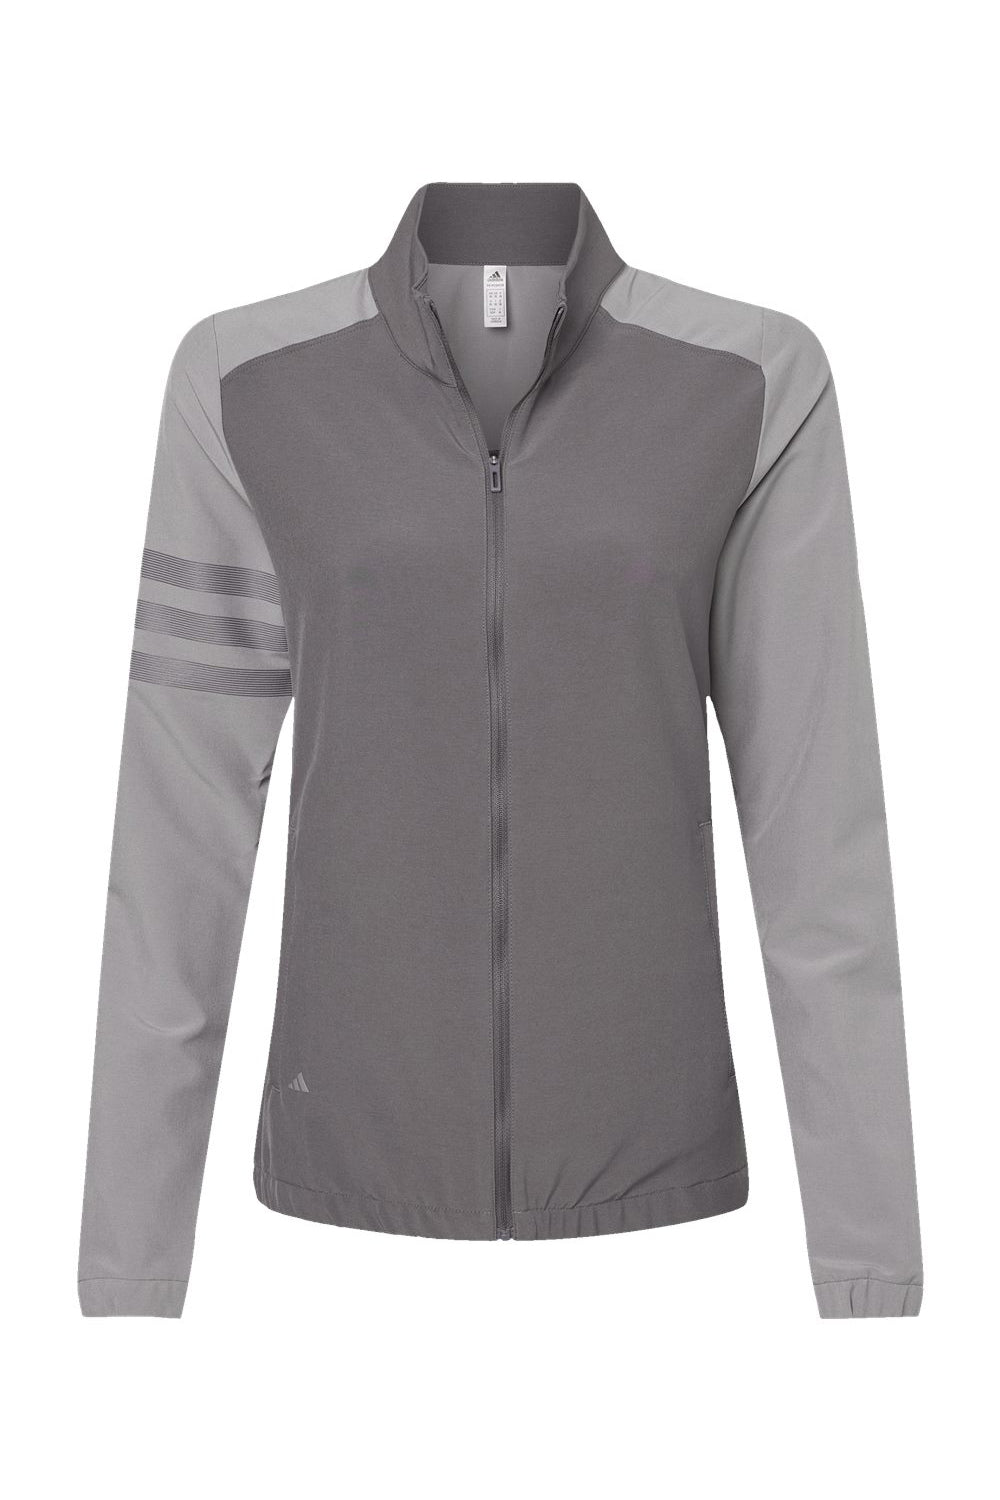 Adidas A268 Womens 3 Stripes Full Zip Jacket Grey Flat Front